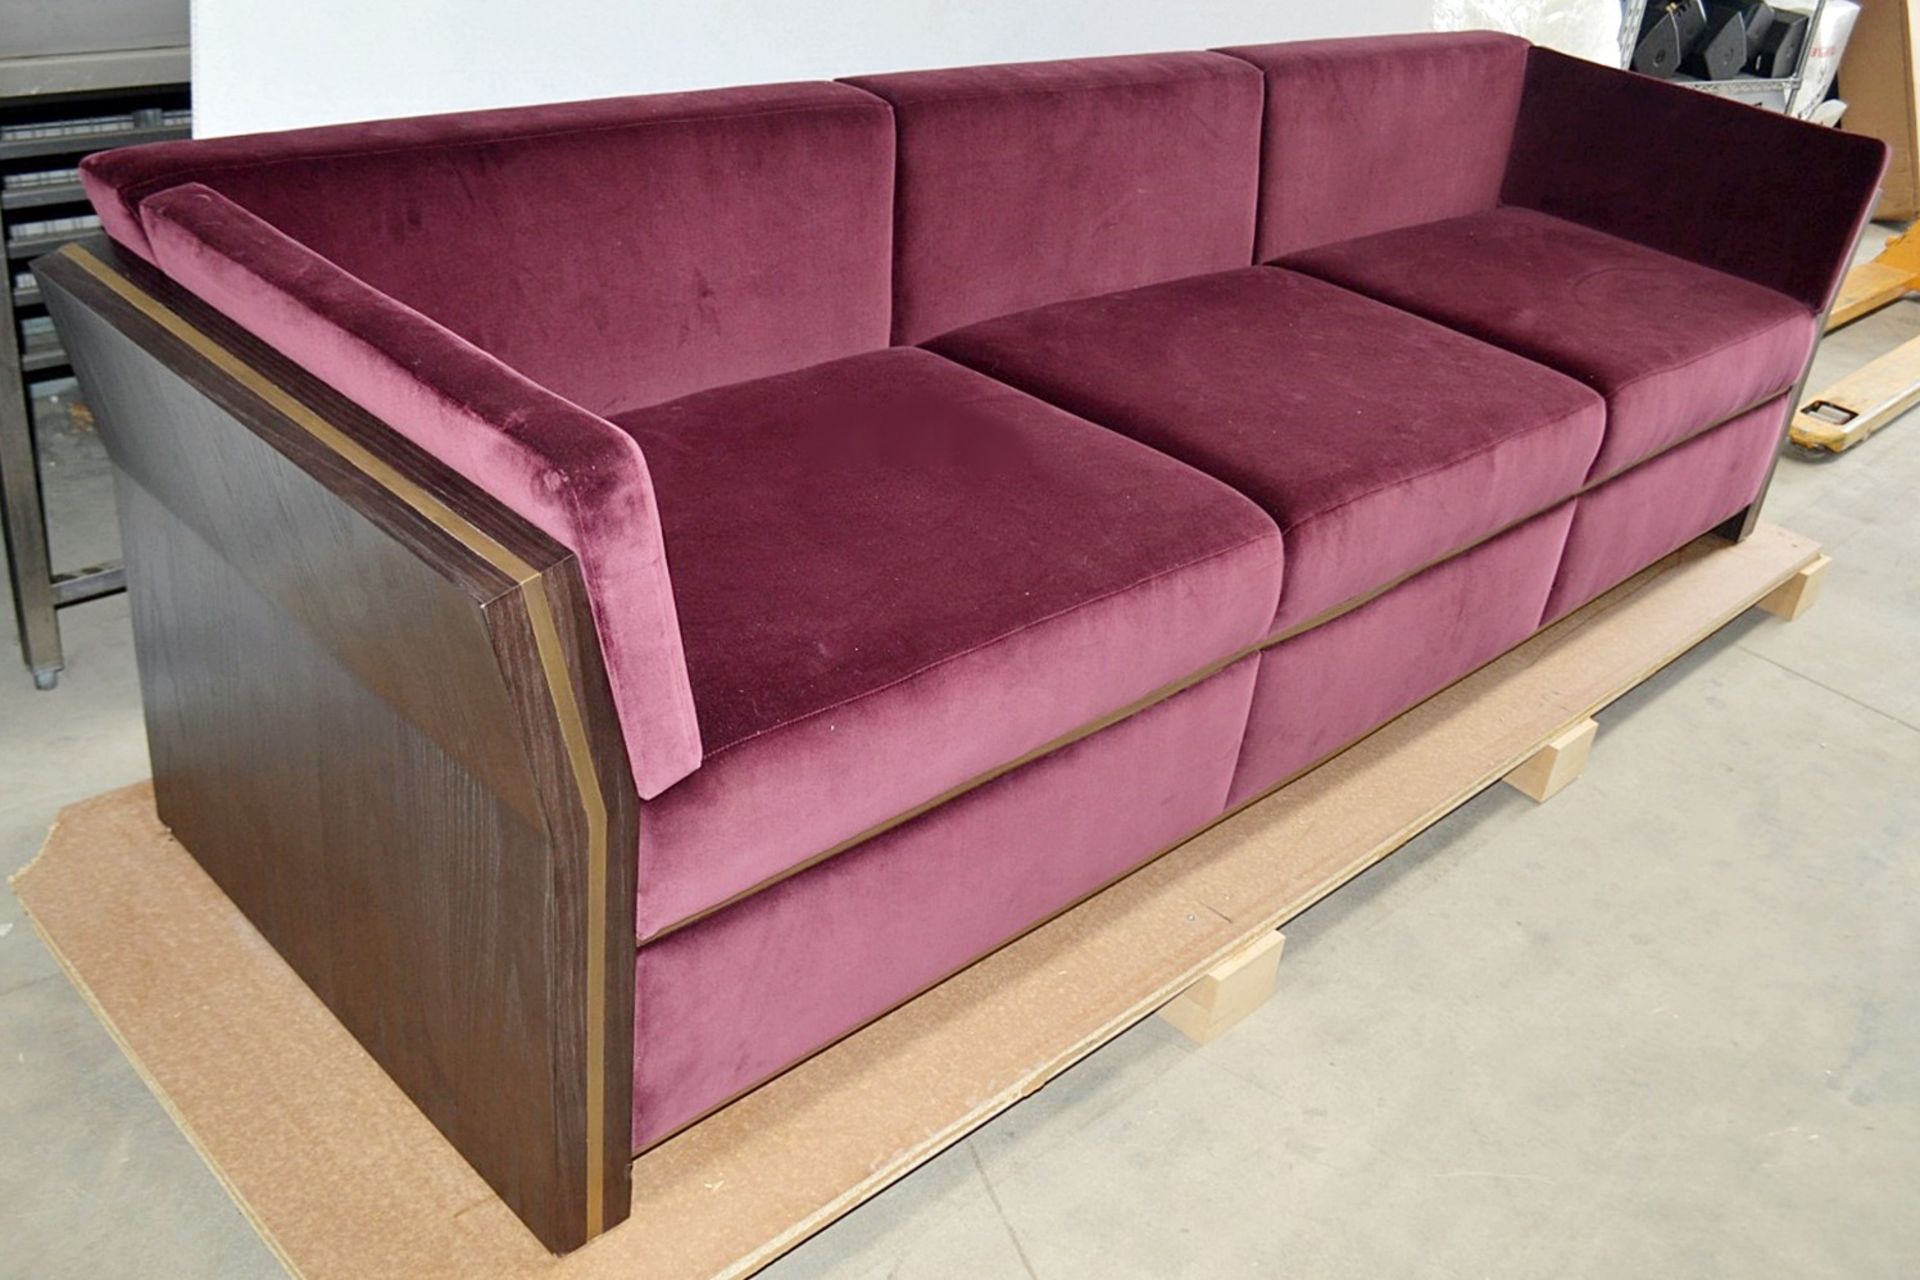 1 x FRATO 'Udaipur' 3 Seater Sofa With Custom Burgundy Velvet Upholstery - Original RRP £8,040 - Image 6 of 8